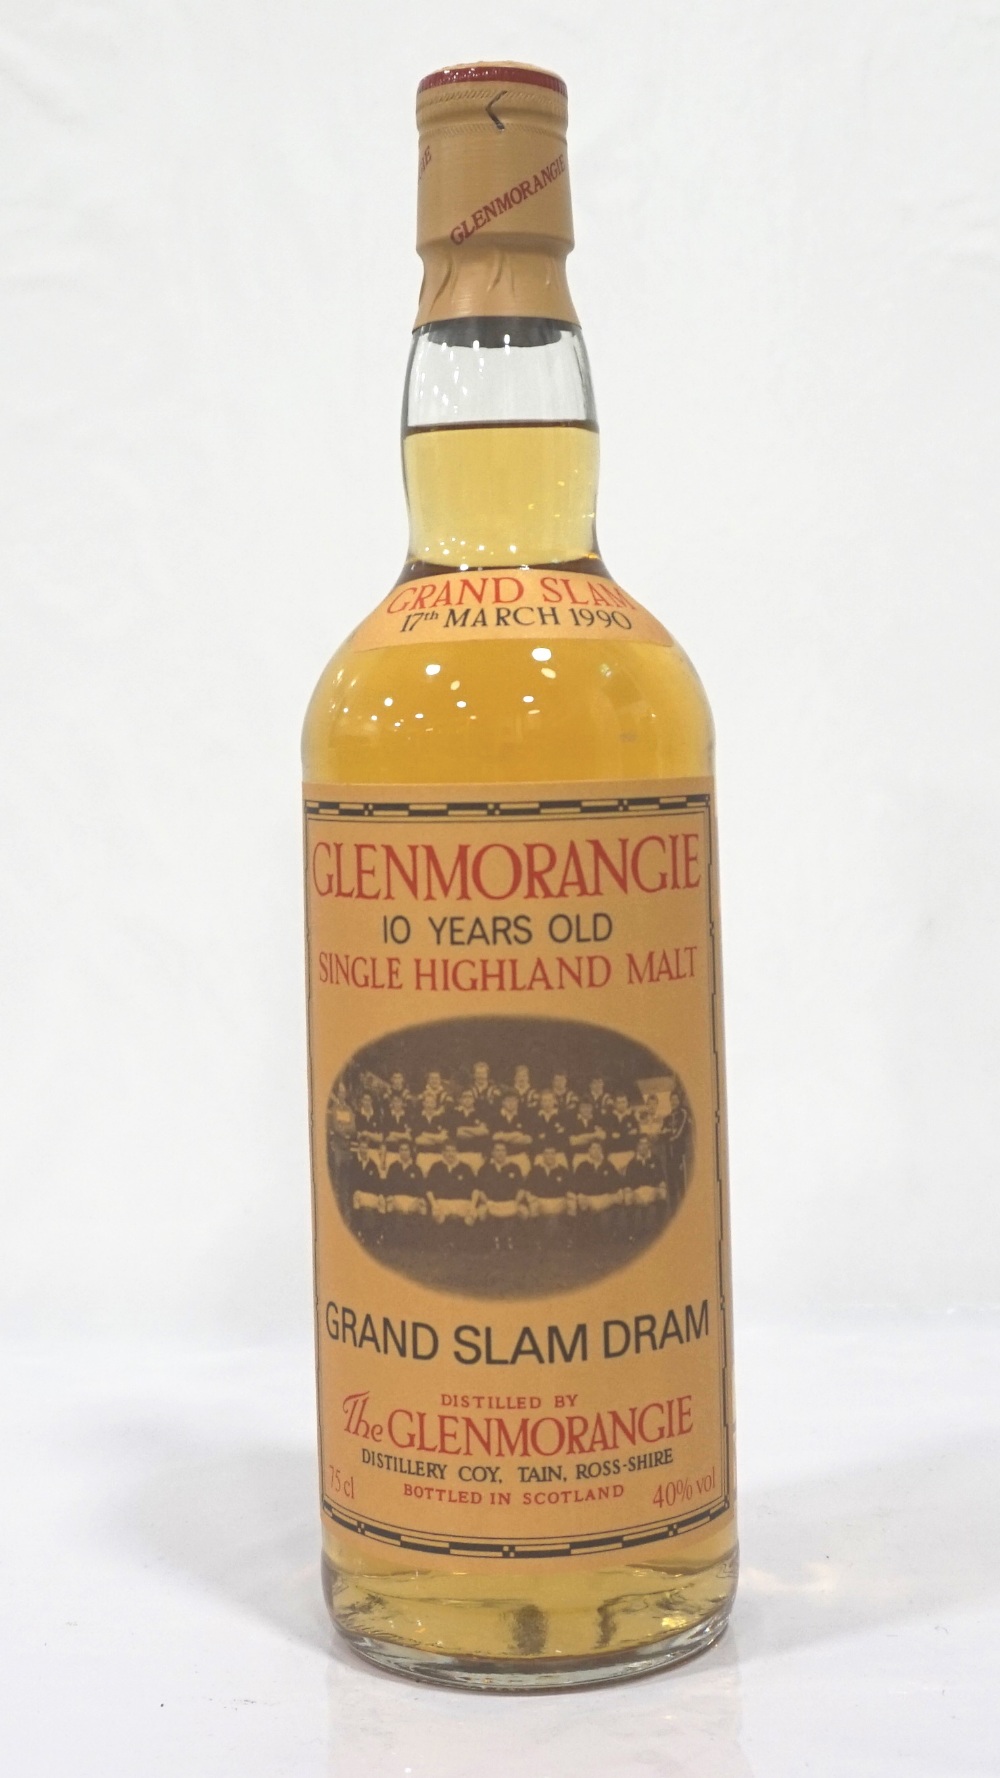 GLENMORANGIE GRAND SLAM DRAM